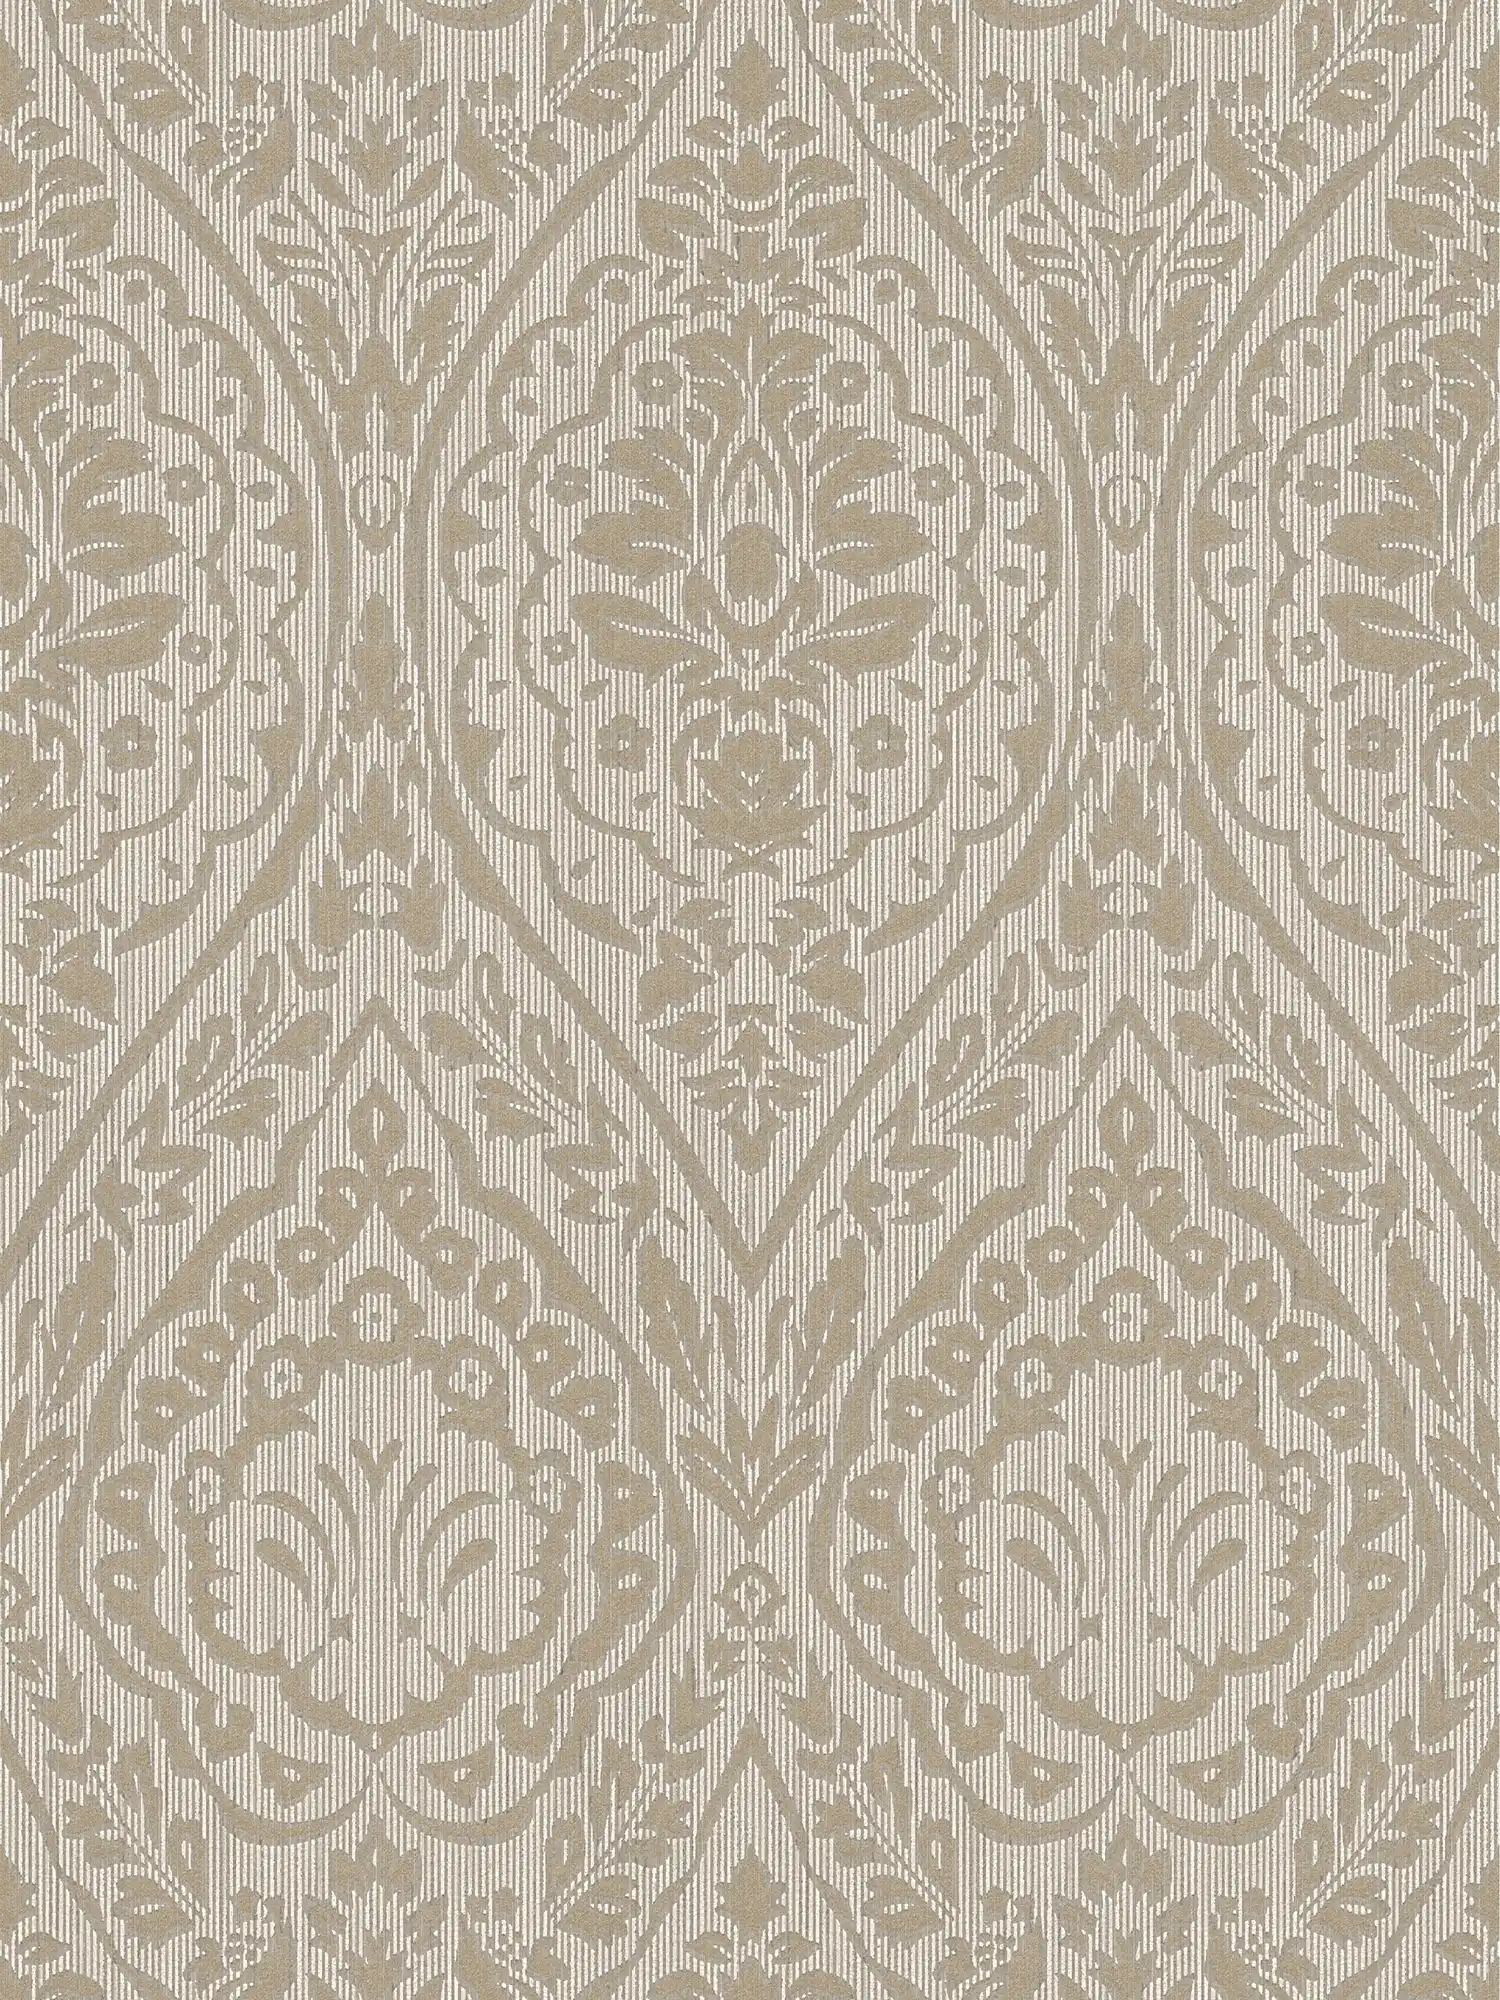 Tapete florales Muster mit Kolonial Stil Ornamenten – Beige, Braun
